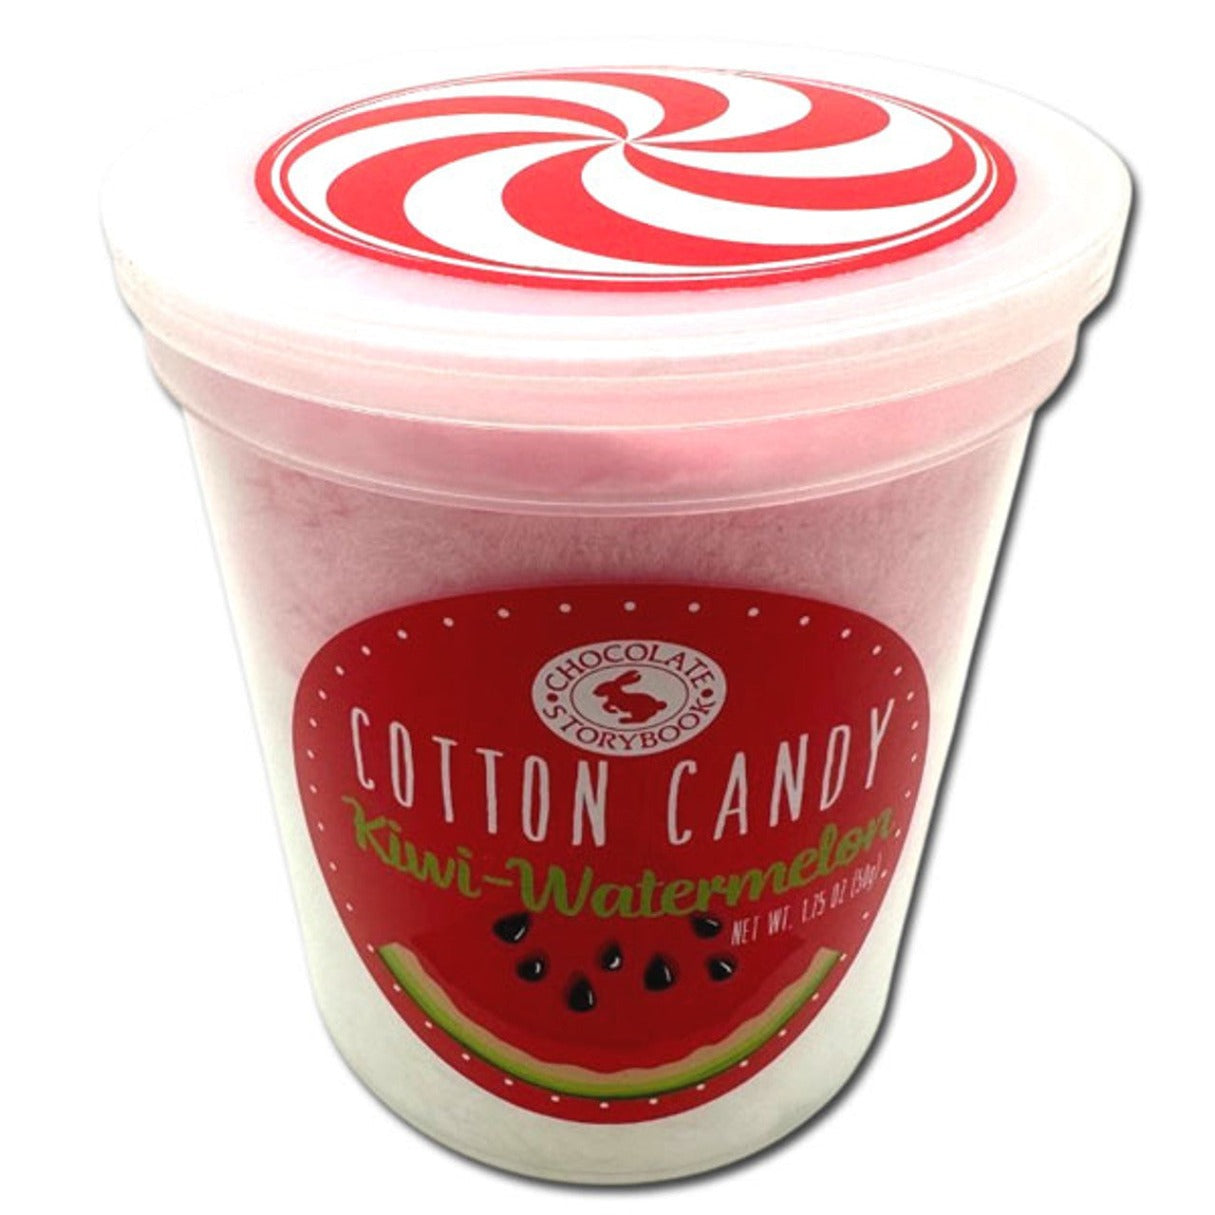 Cotton Candy Kiwi-Watermelon Flavored 1.75oz - 12ct